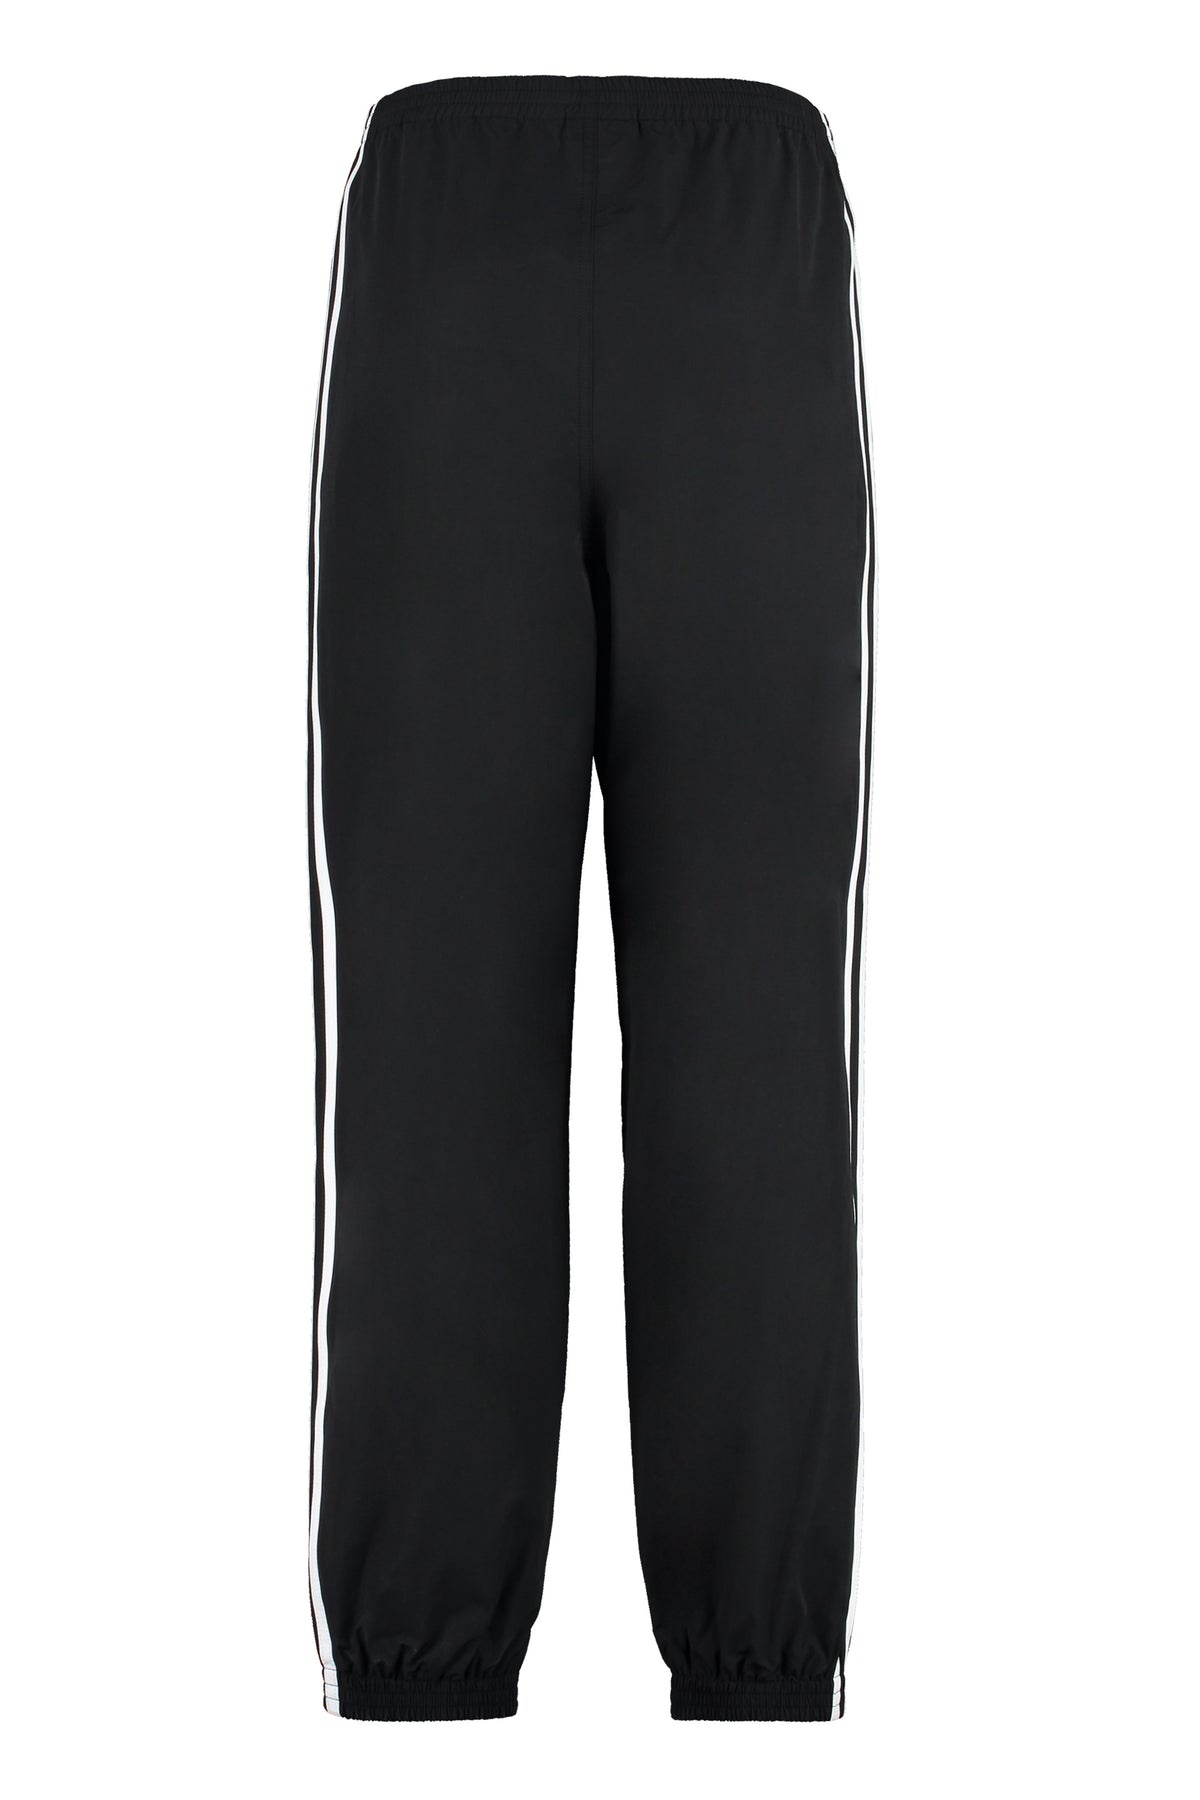 adidas x Balenciaga - Baggy Track Pants in Black adidas